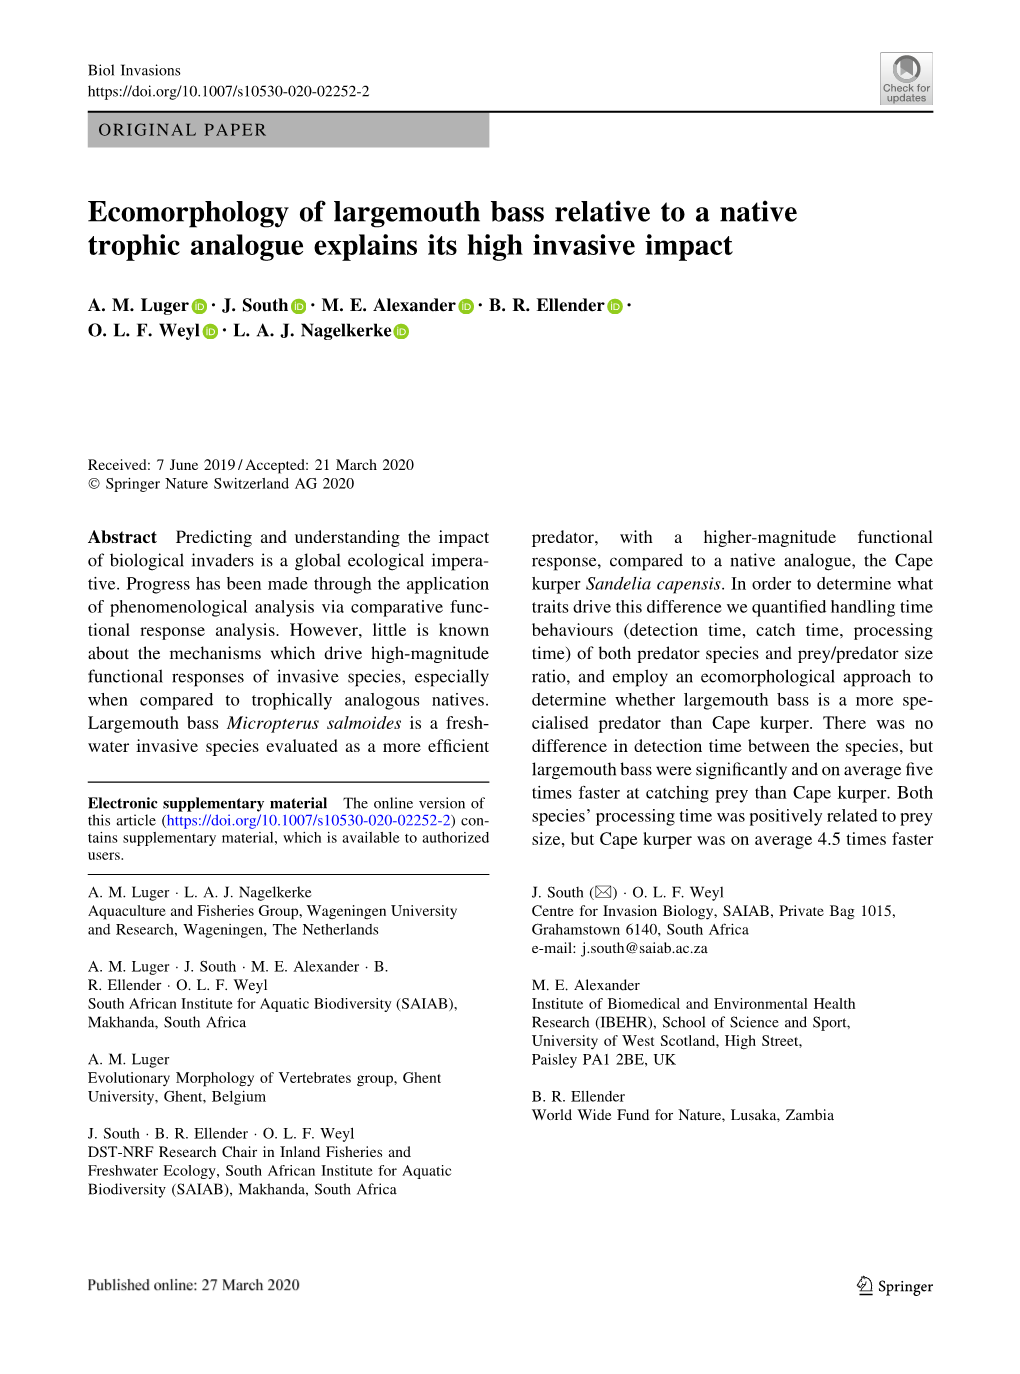 Ecomorphology of Largemouth Bass Relative to a Native Trophic Analogue Explains Its High Invasive Impact